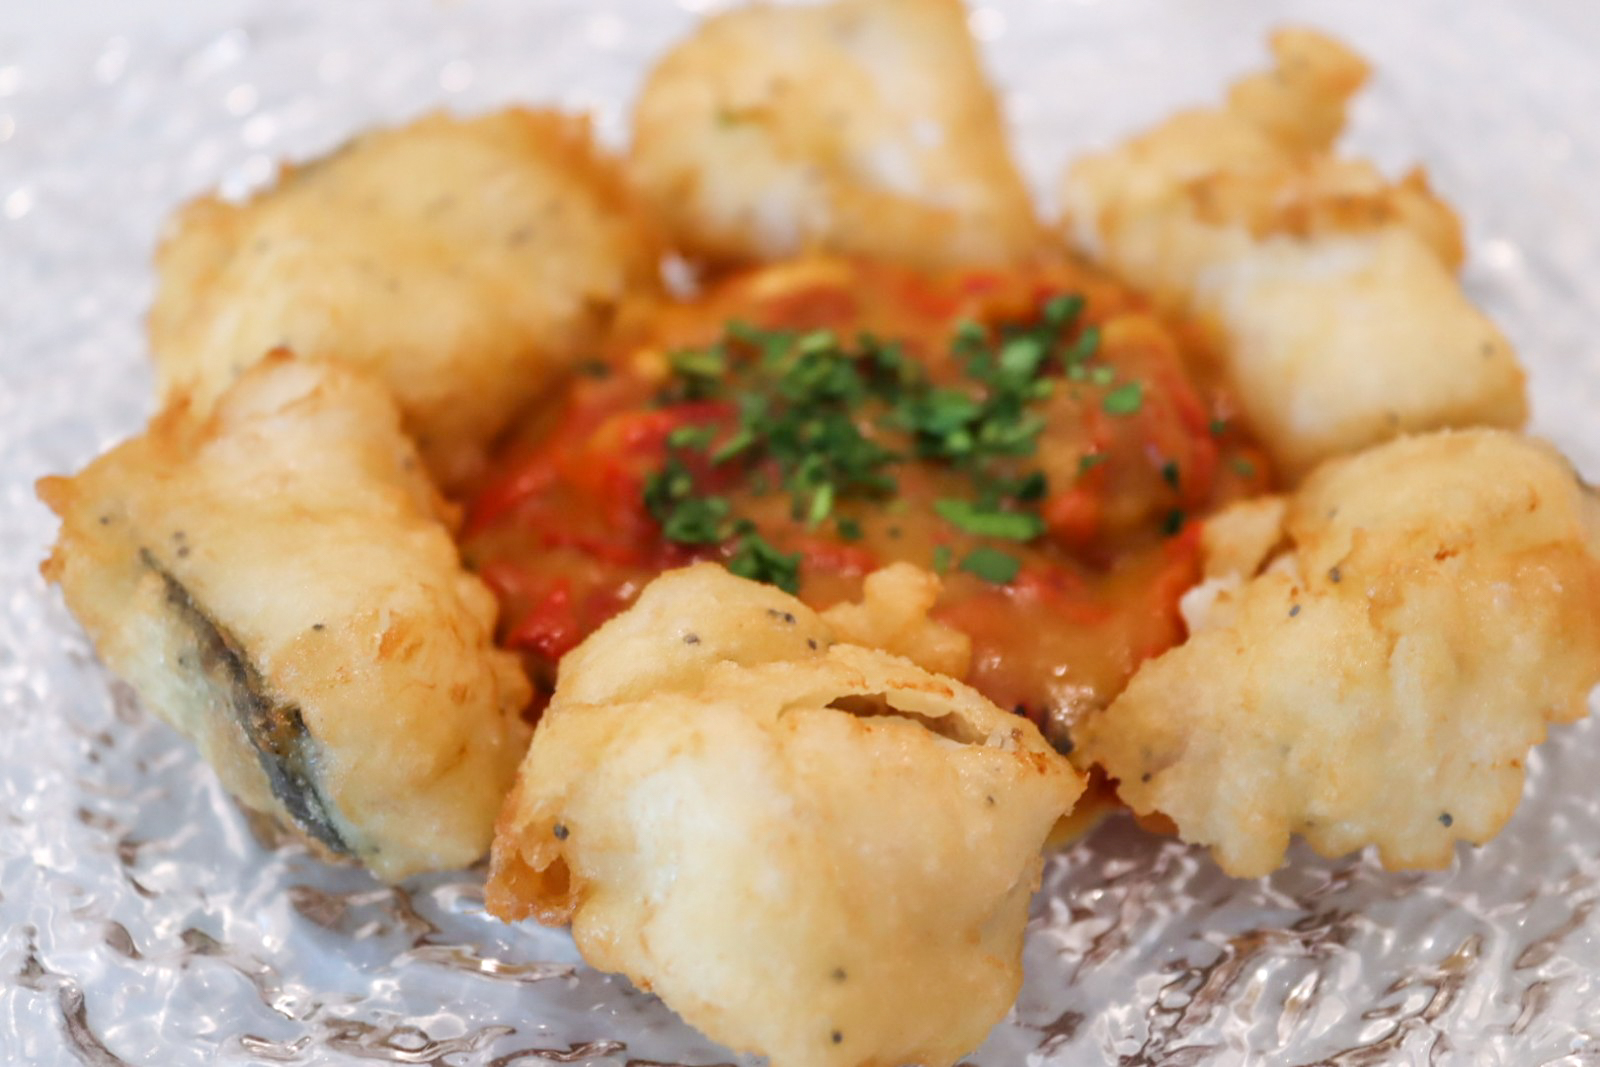 Cod in tempura on piquillo pepper 'ajoarriero'